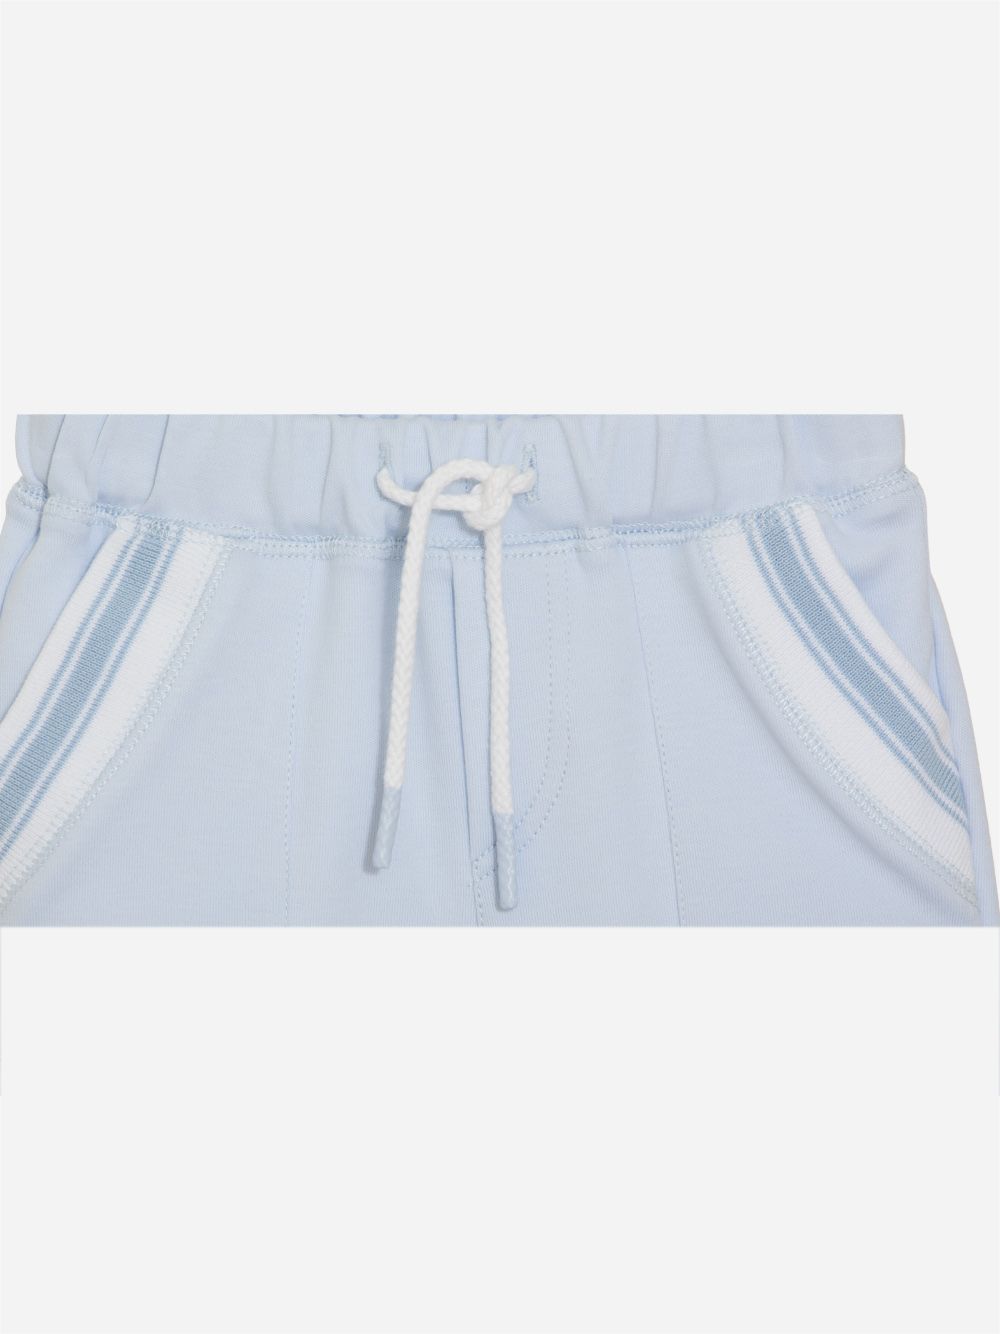 Patachou Boys Blue Shorts - 3233308